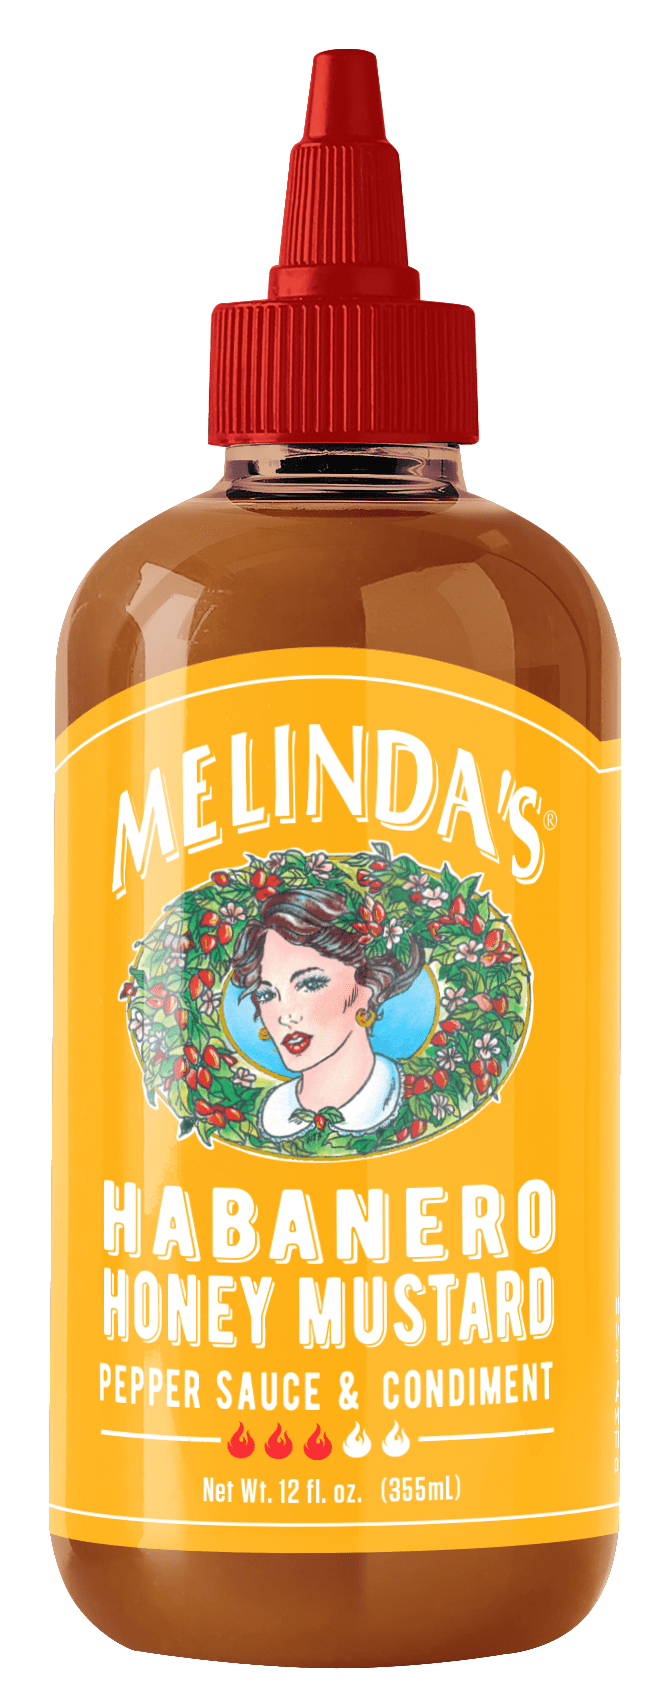 Melinda's Habanero Honey Mustard, Pepper Sauce and Condiment, 12 oz